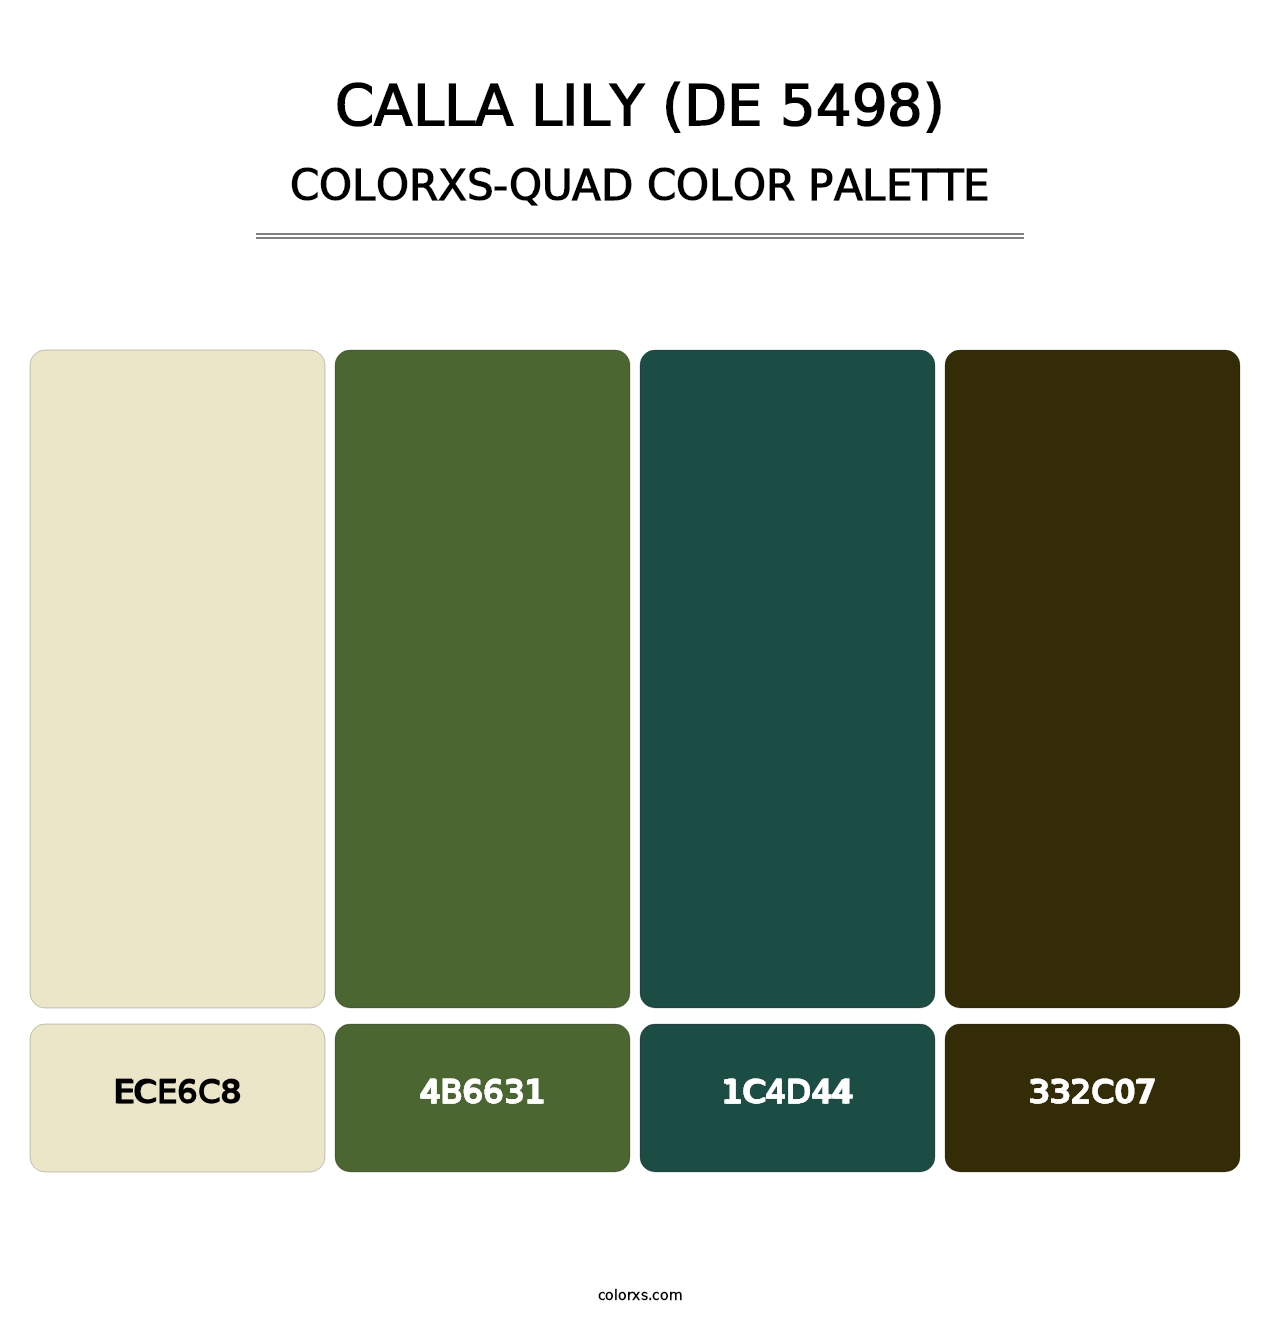 Calla Lily (DE 5498) - Colorxs Quad Palette